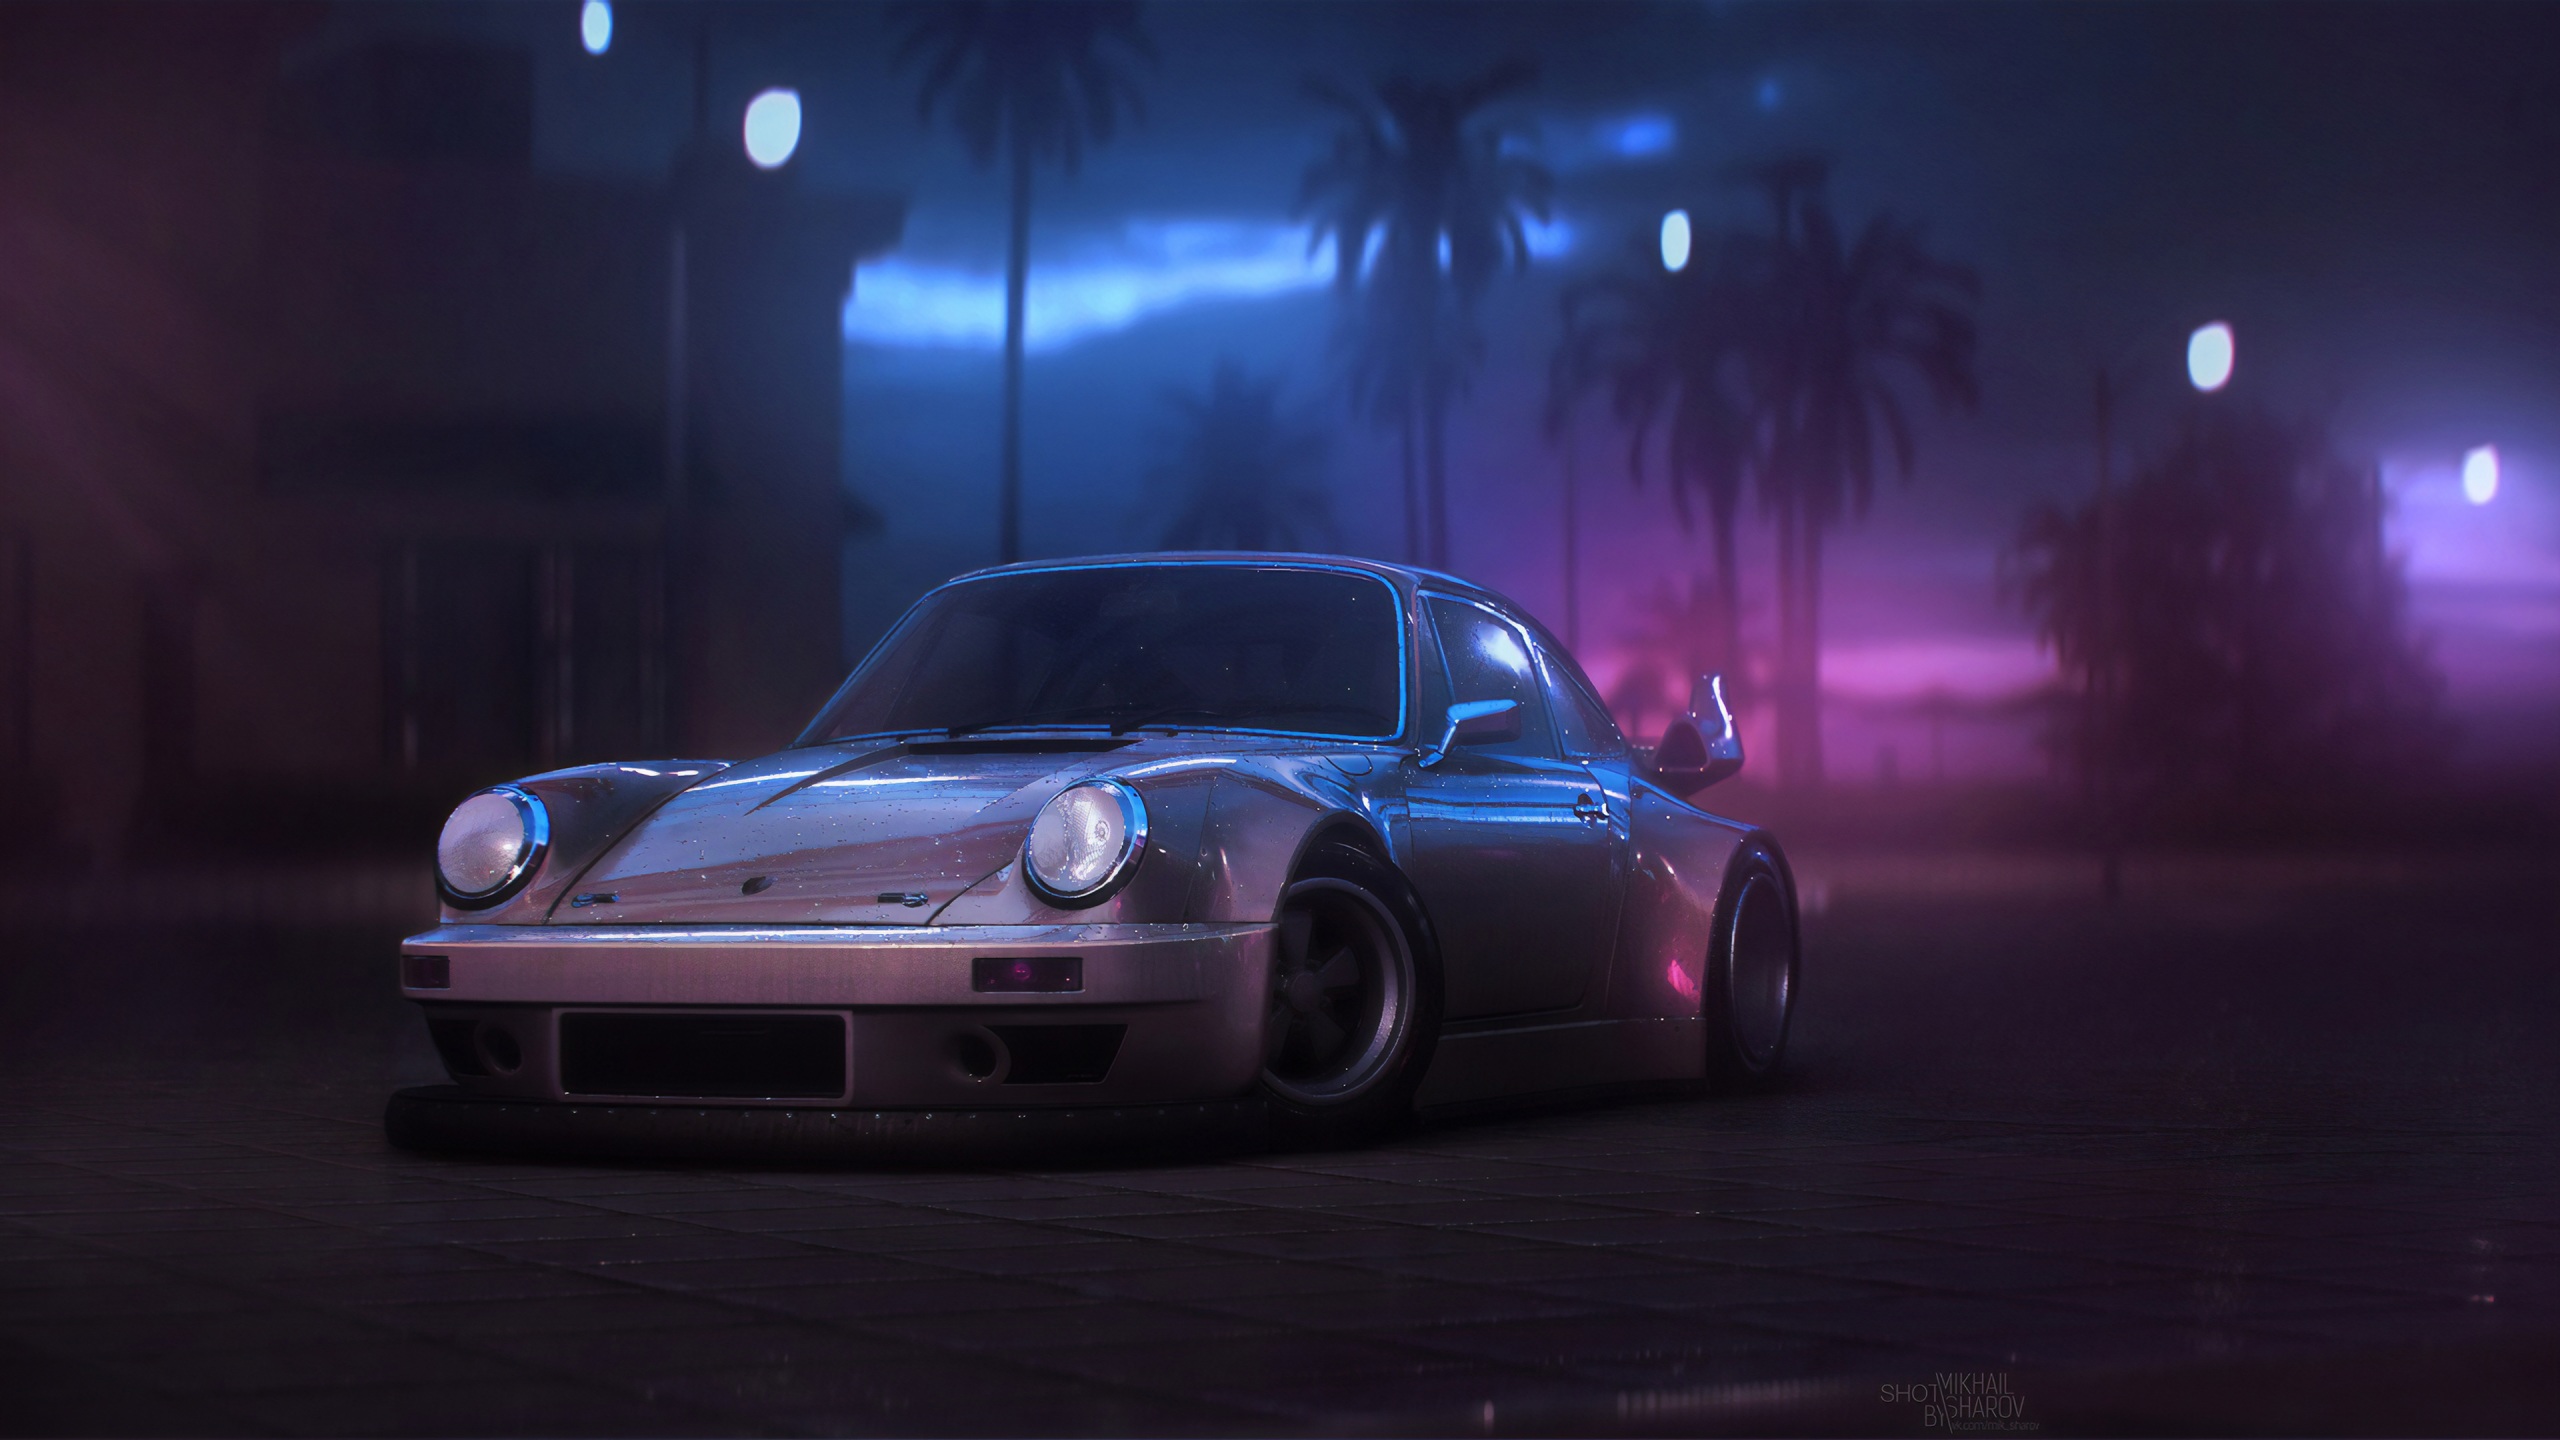 General 2560x1440 Need for Speed video games video game art car vehicle sports car lights artwork Porsche Porsche 911 silver cars purple blue night Miami wet Mikhail Sharov frontal view